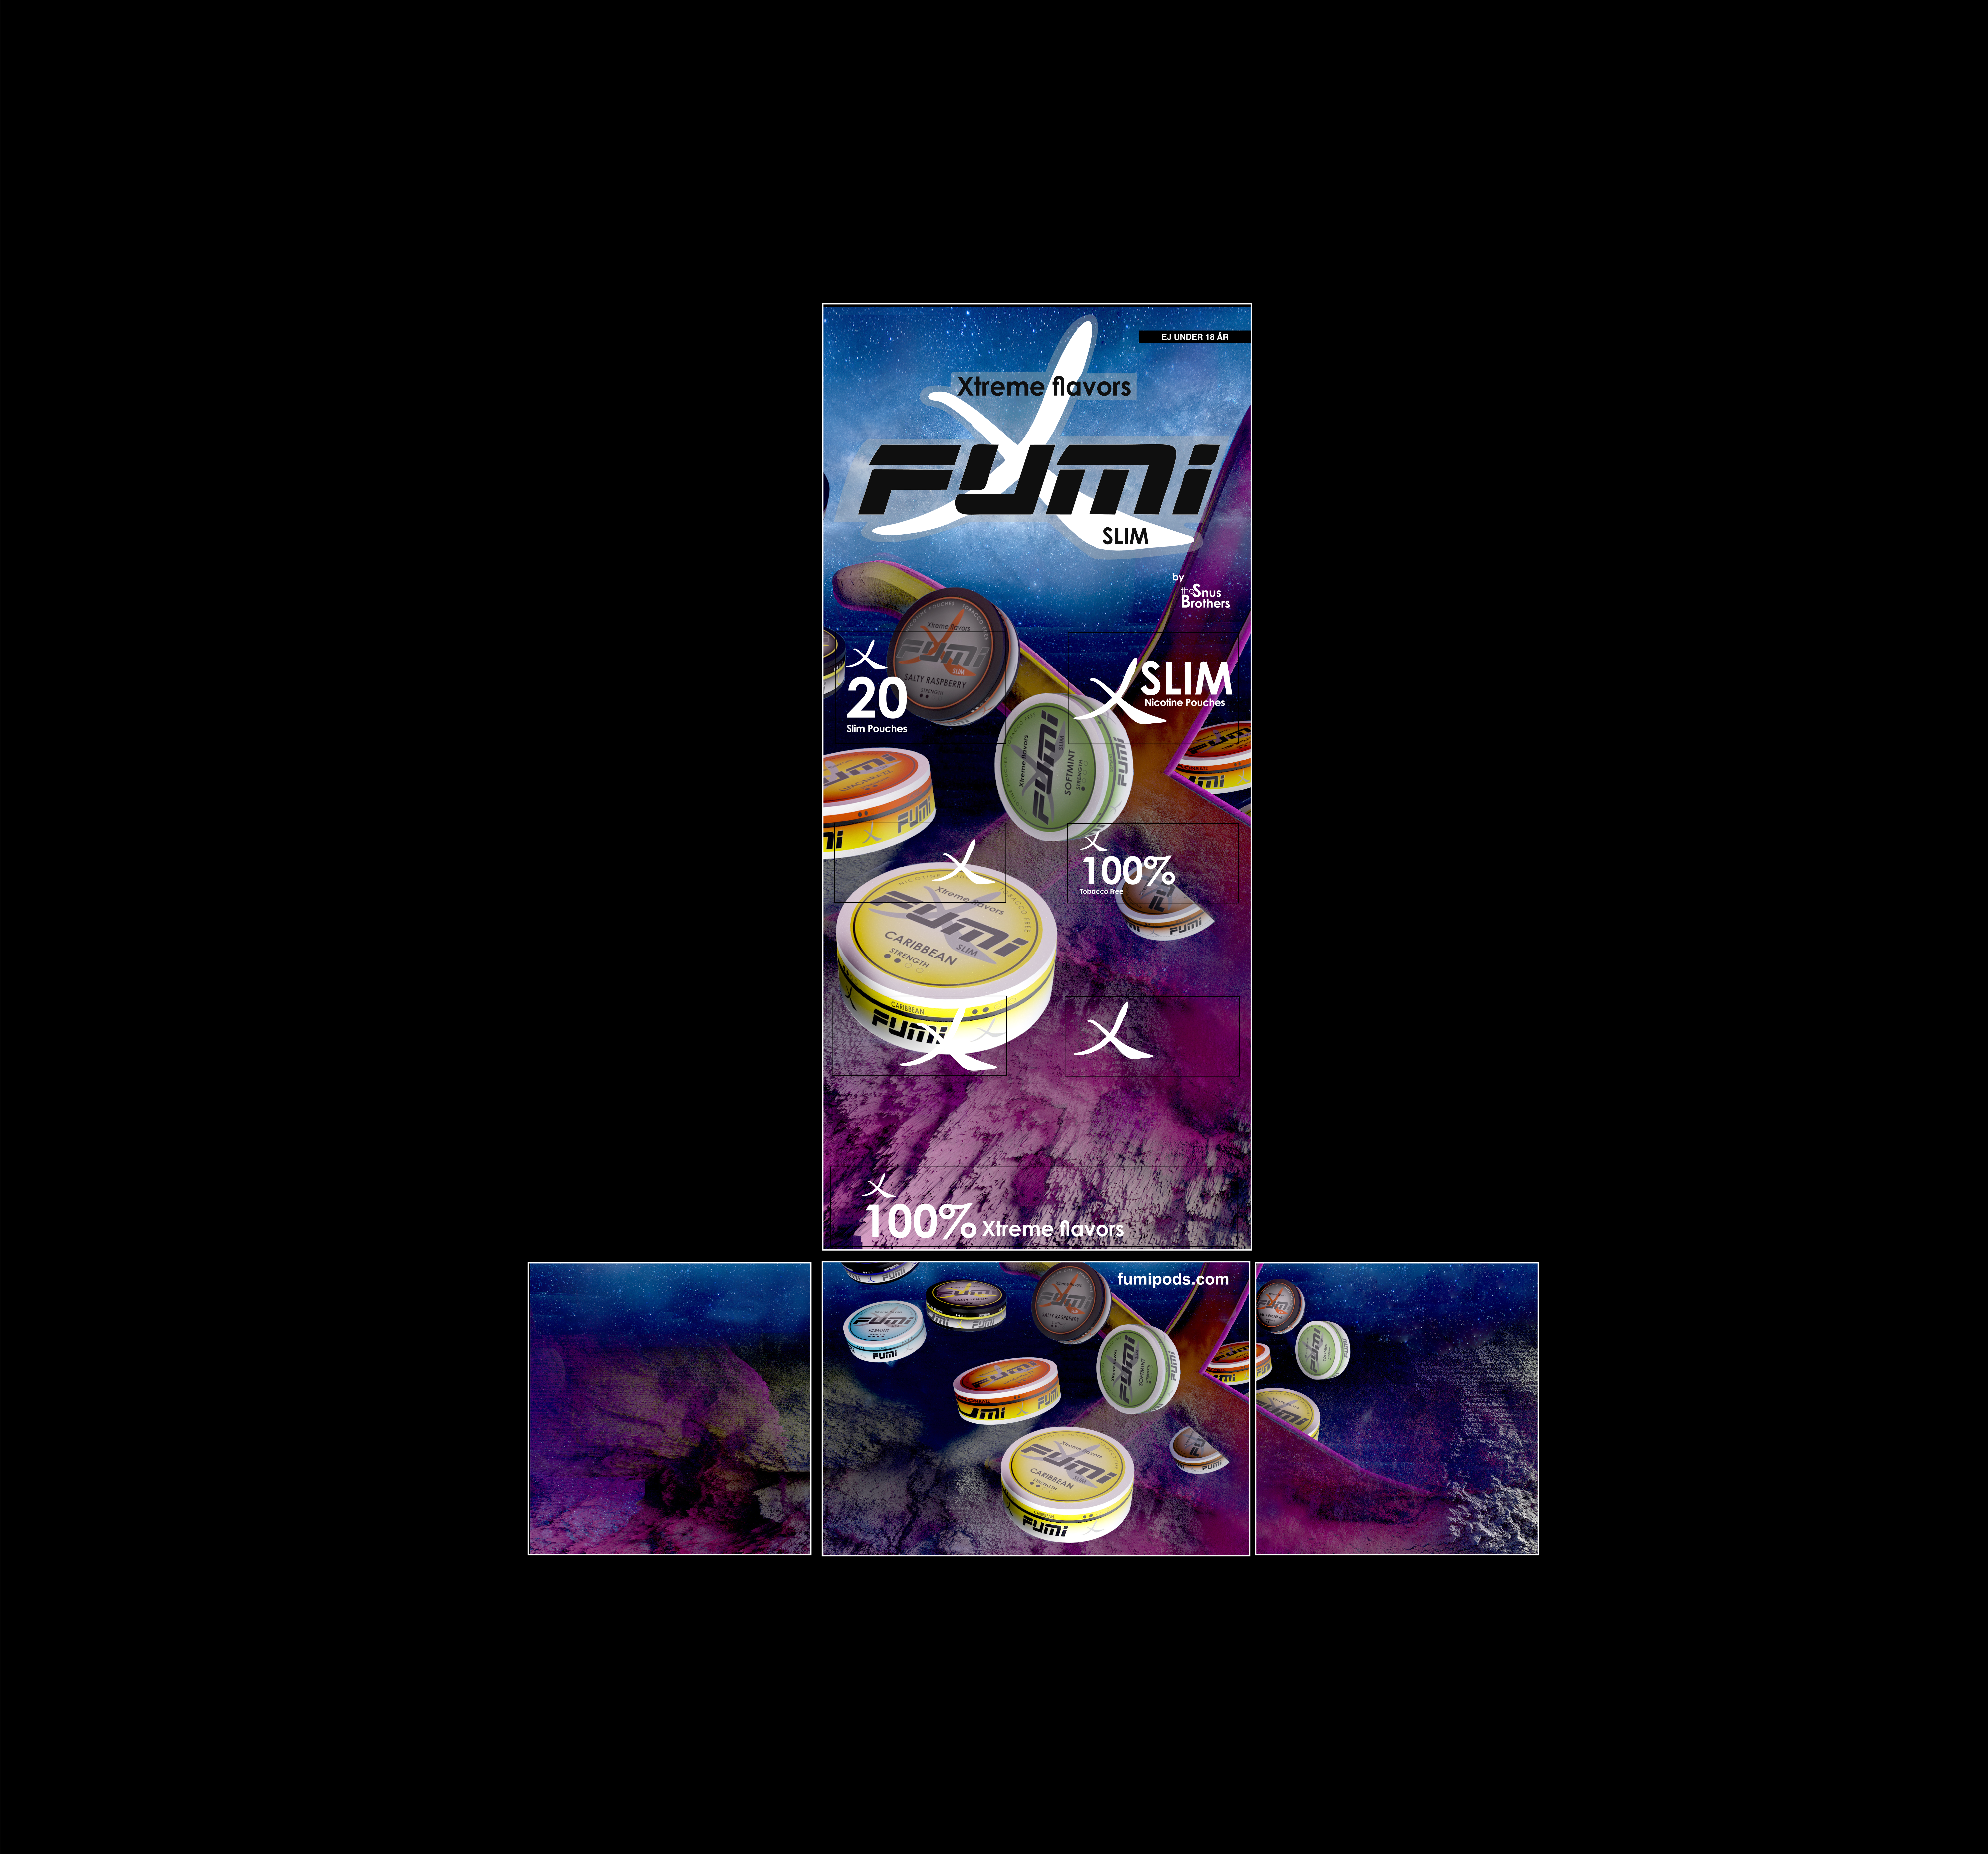 Fumi Universe Display by Future Supply